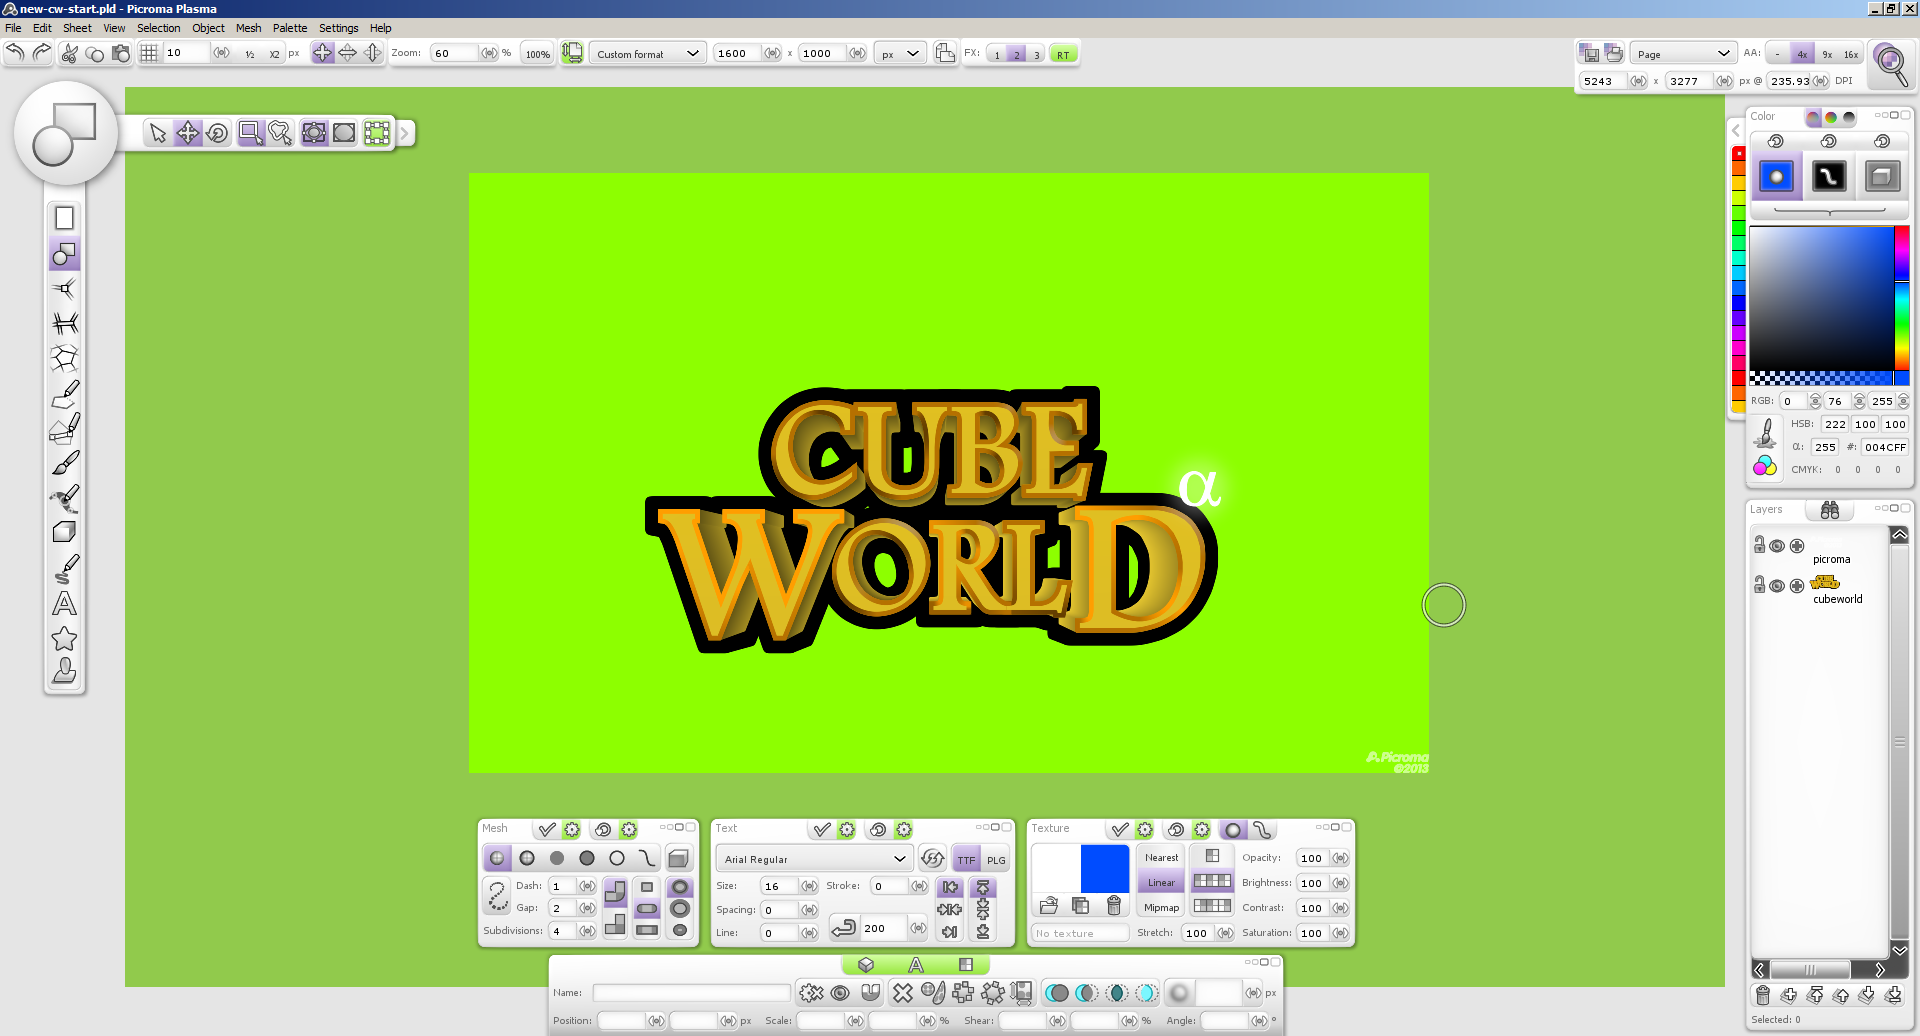 Editing Cube World's logo